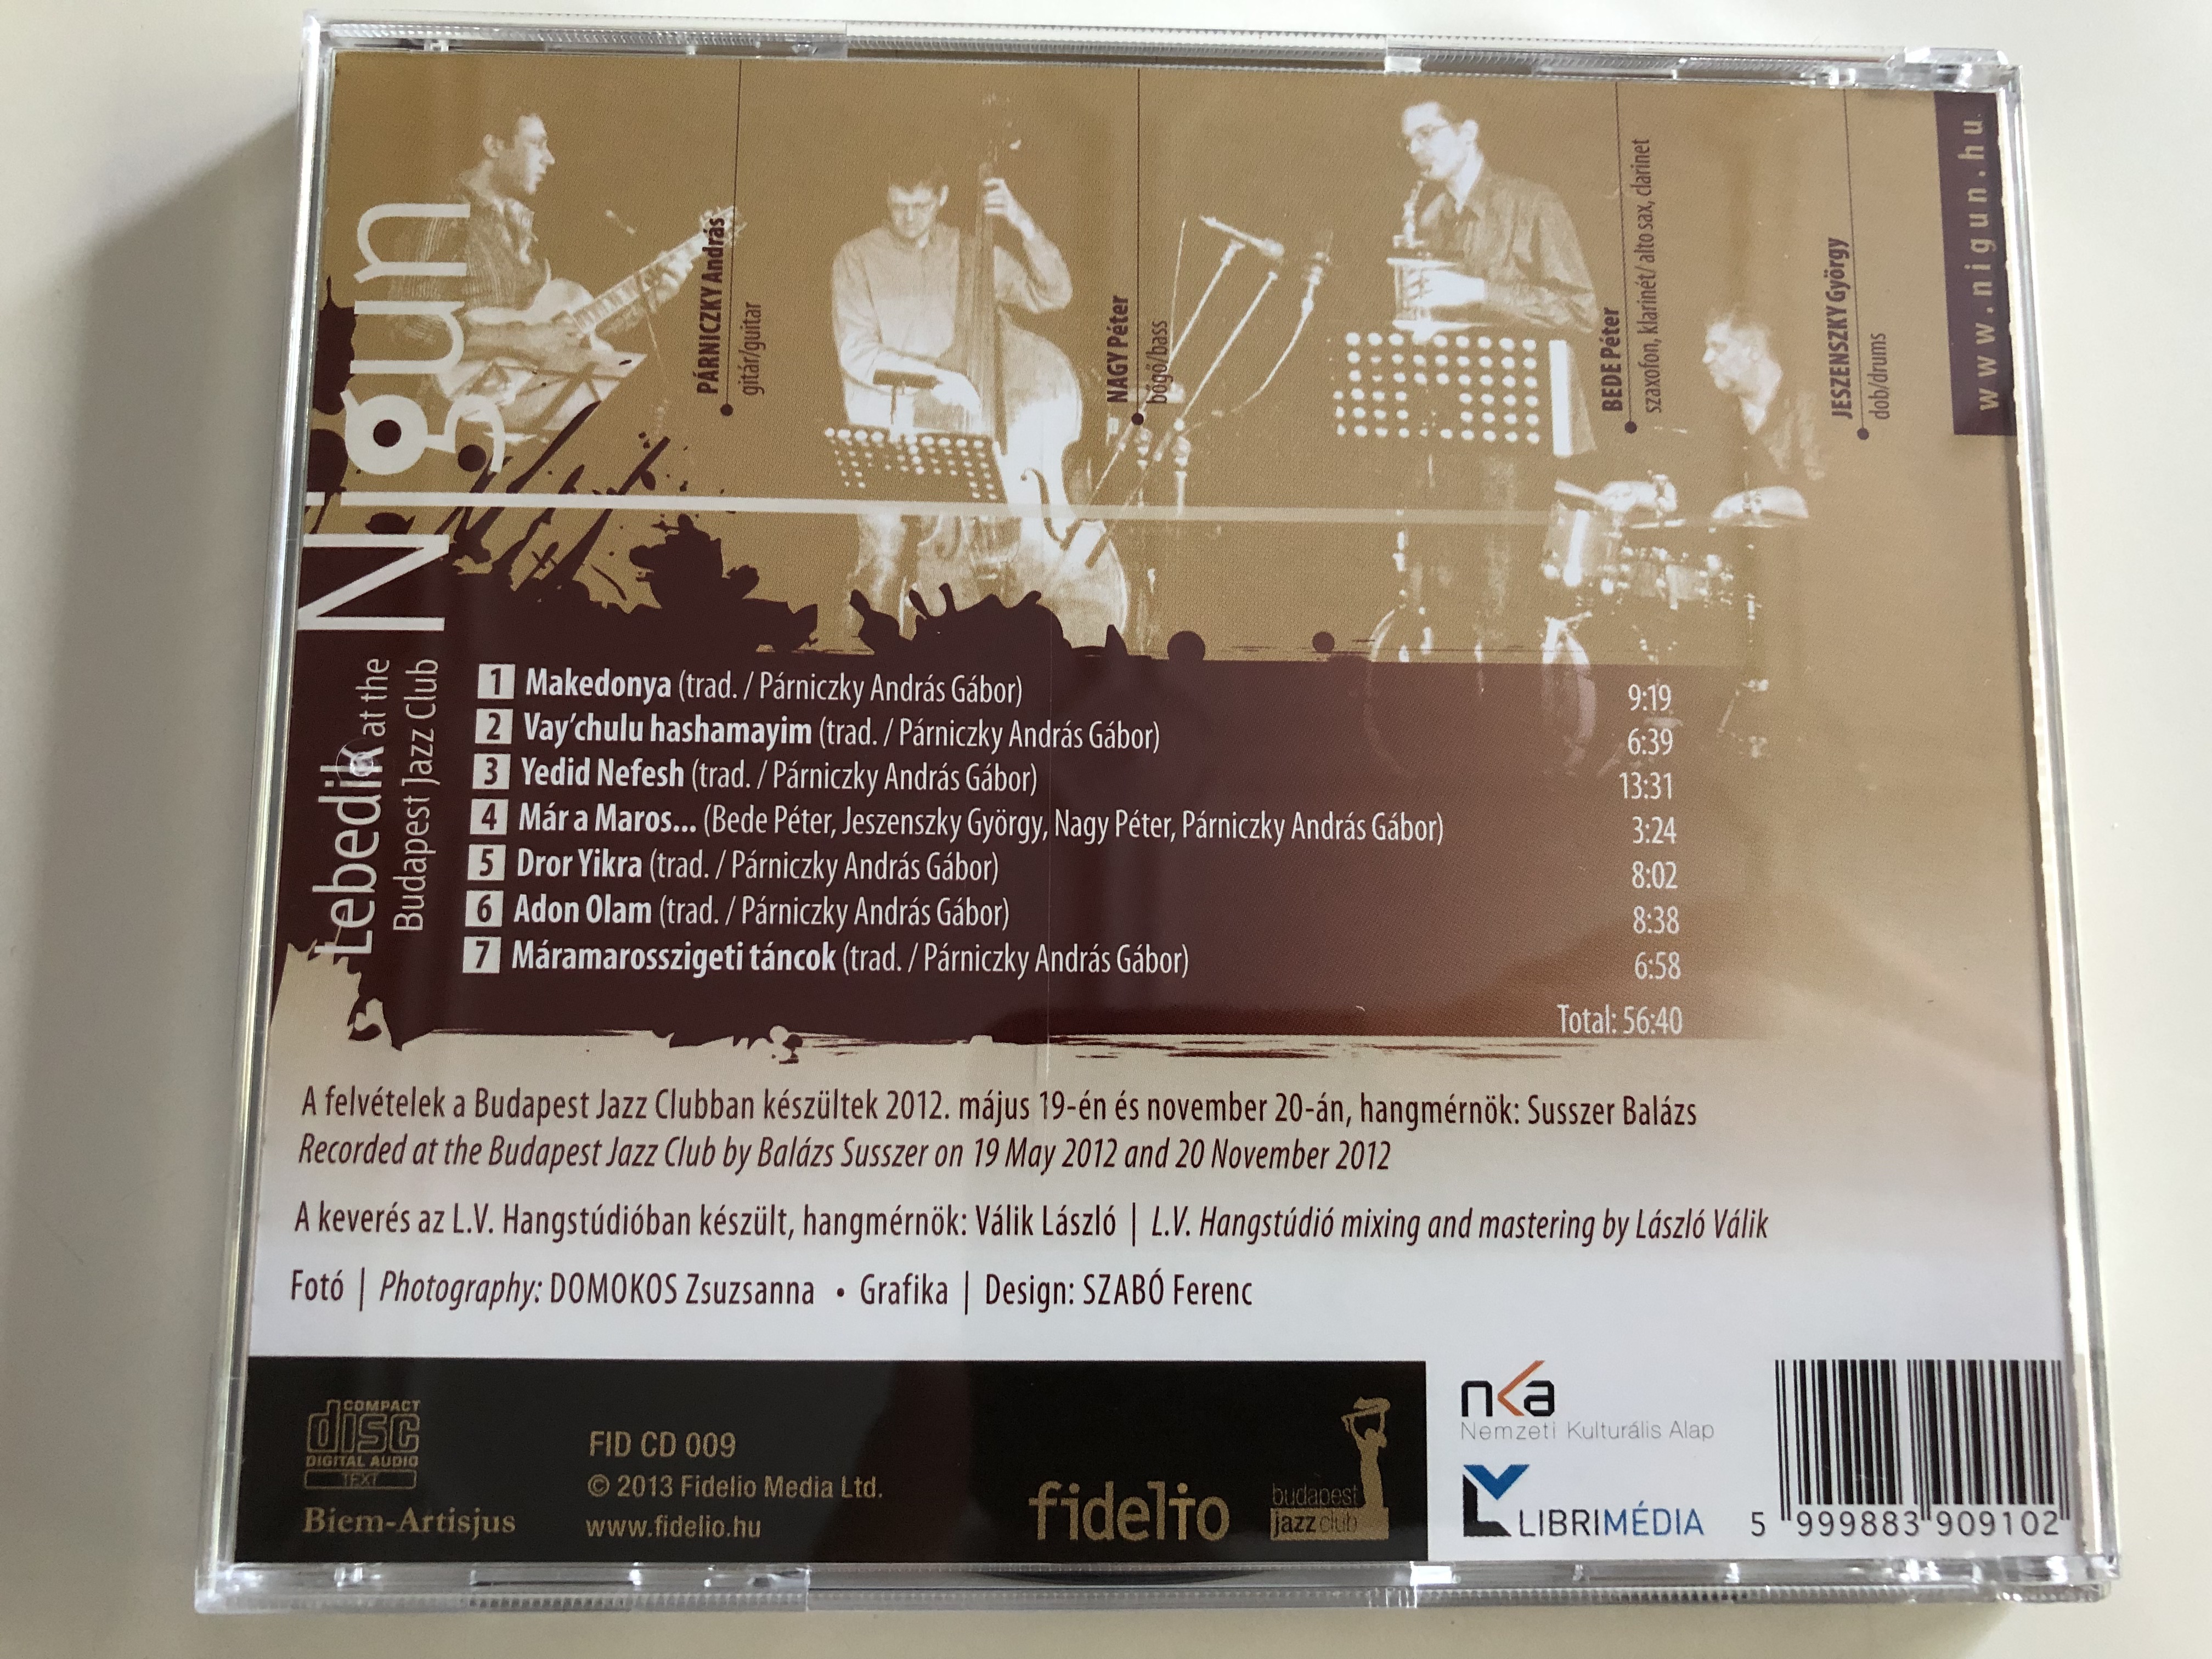 nigun-lebedik-at-the-budapest-jazz-club-audio-cd-2012-fidelio-fid-cd-009-6-.jpg